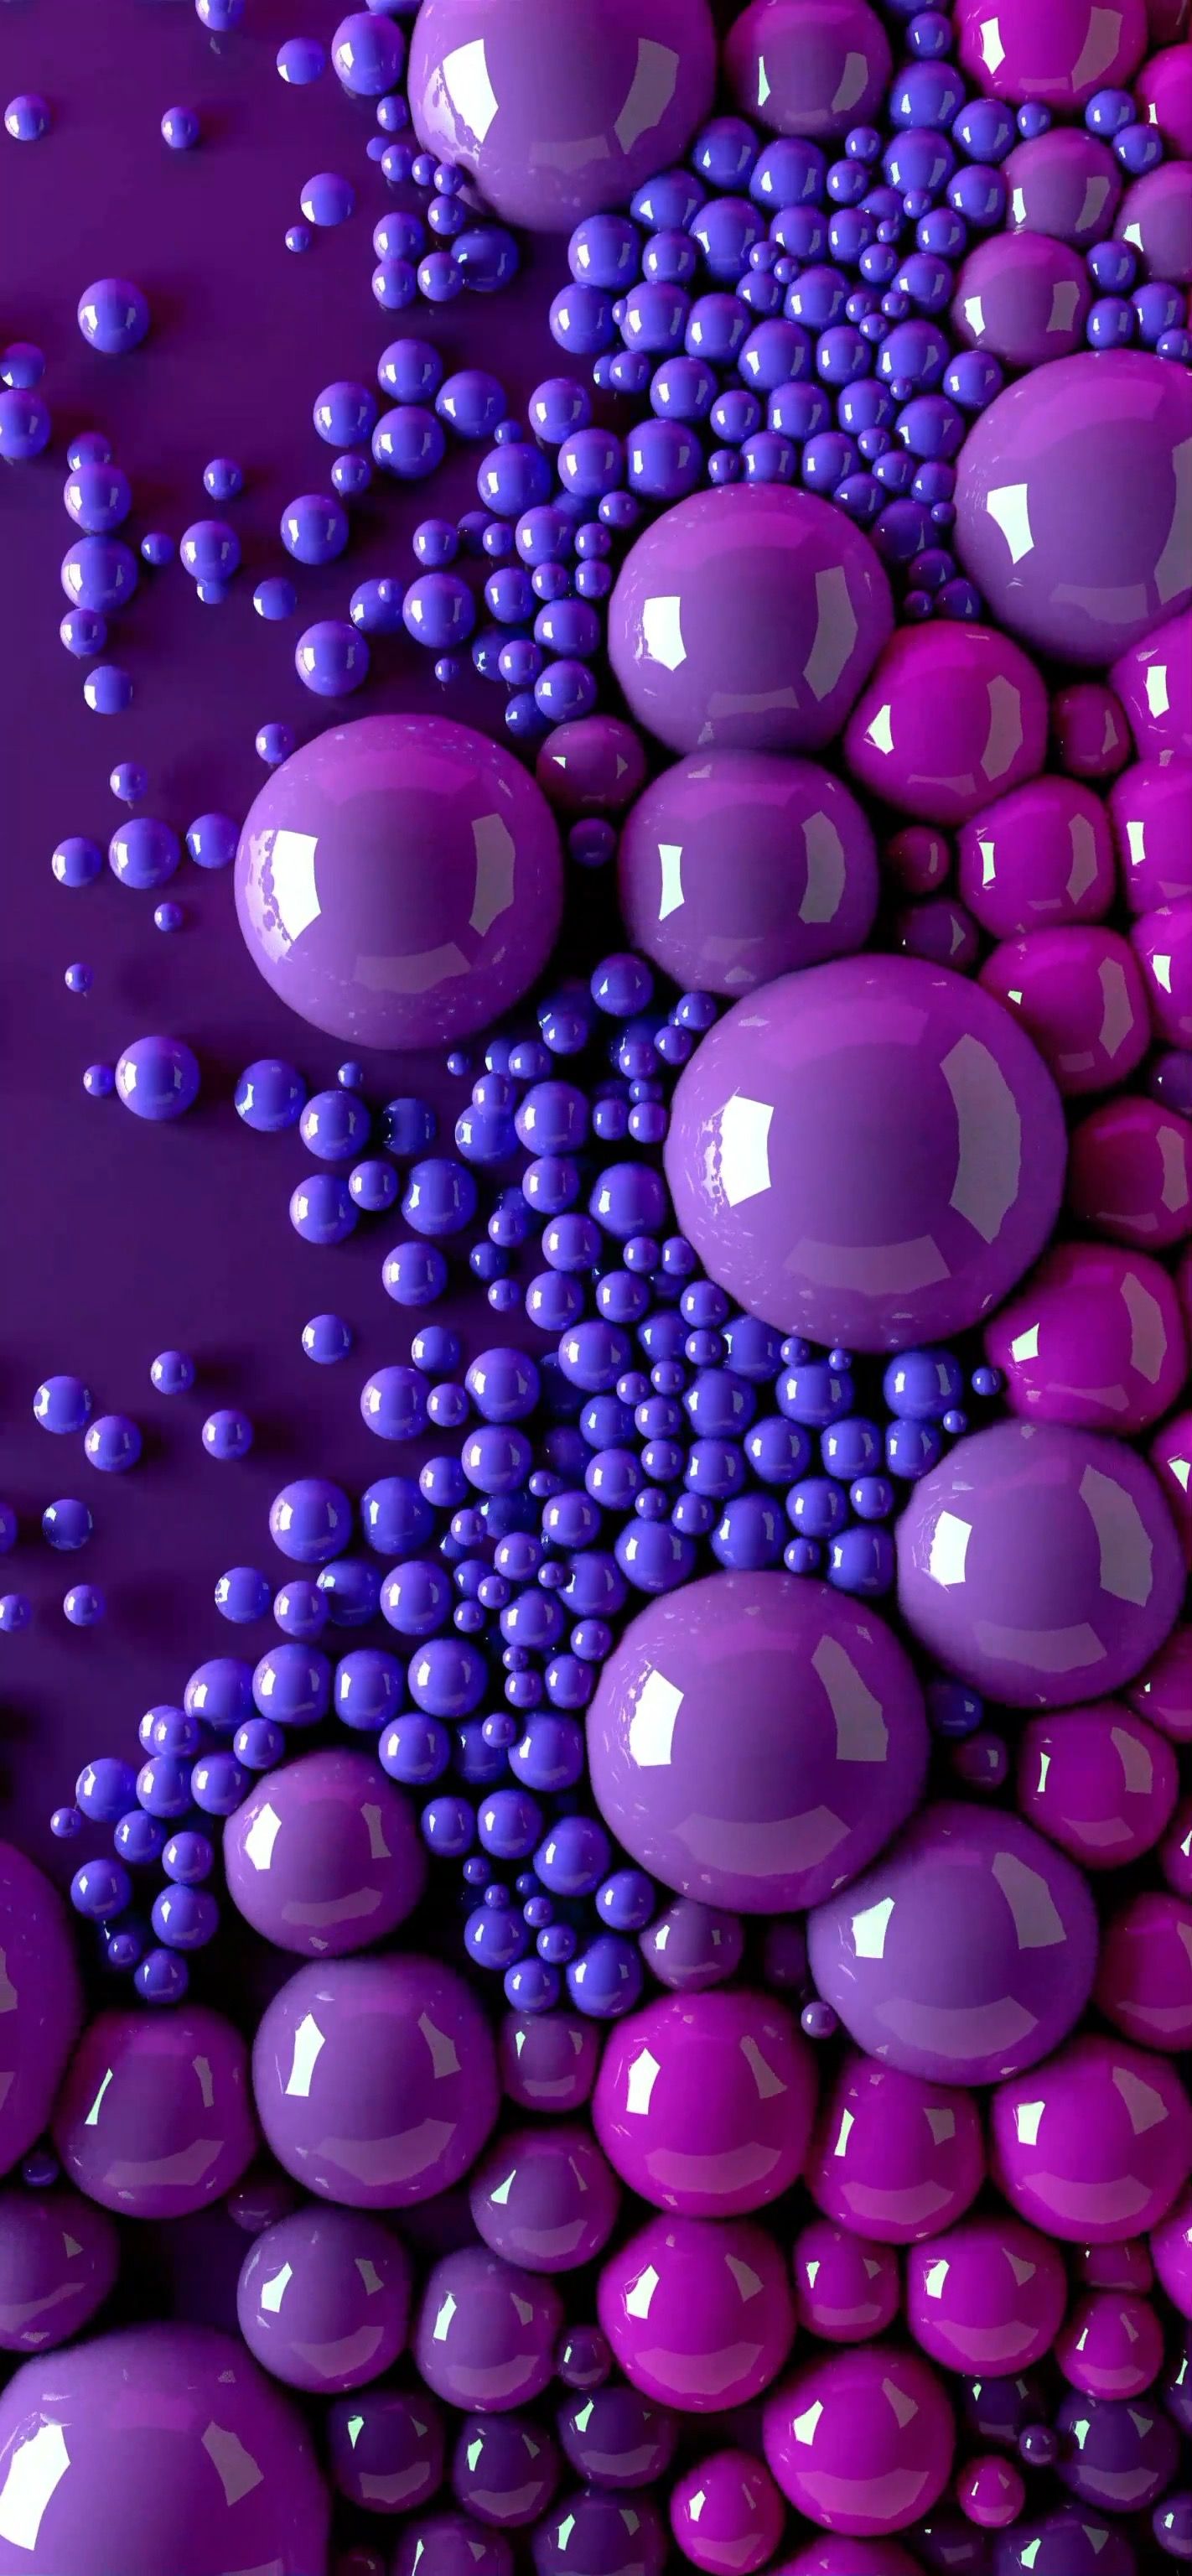 Moving Bubbles. LIVE Wallpaper Central. Bubbles wallpaper, Cellphone wallpaper background, Screen savers wallpaper